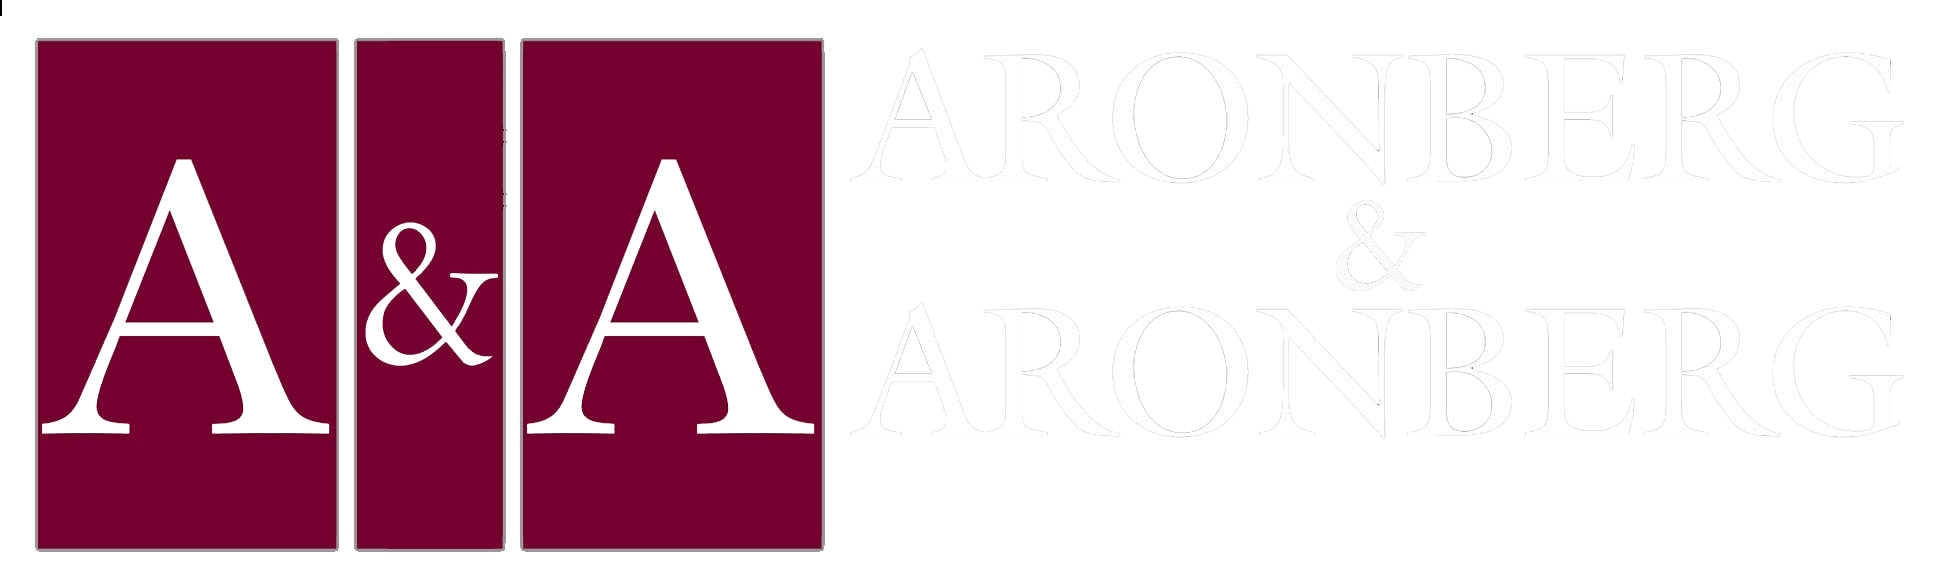 aronberg law logo.png